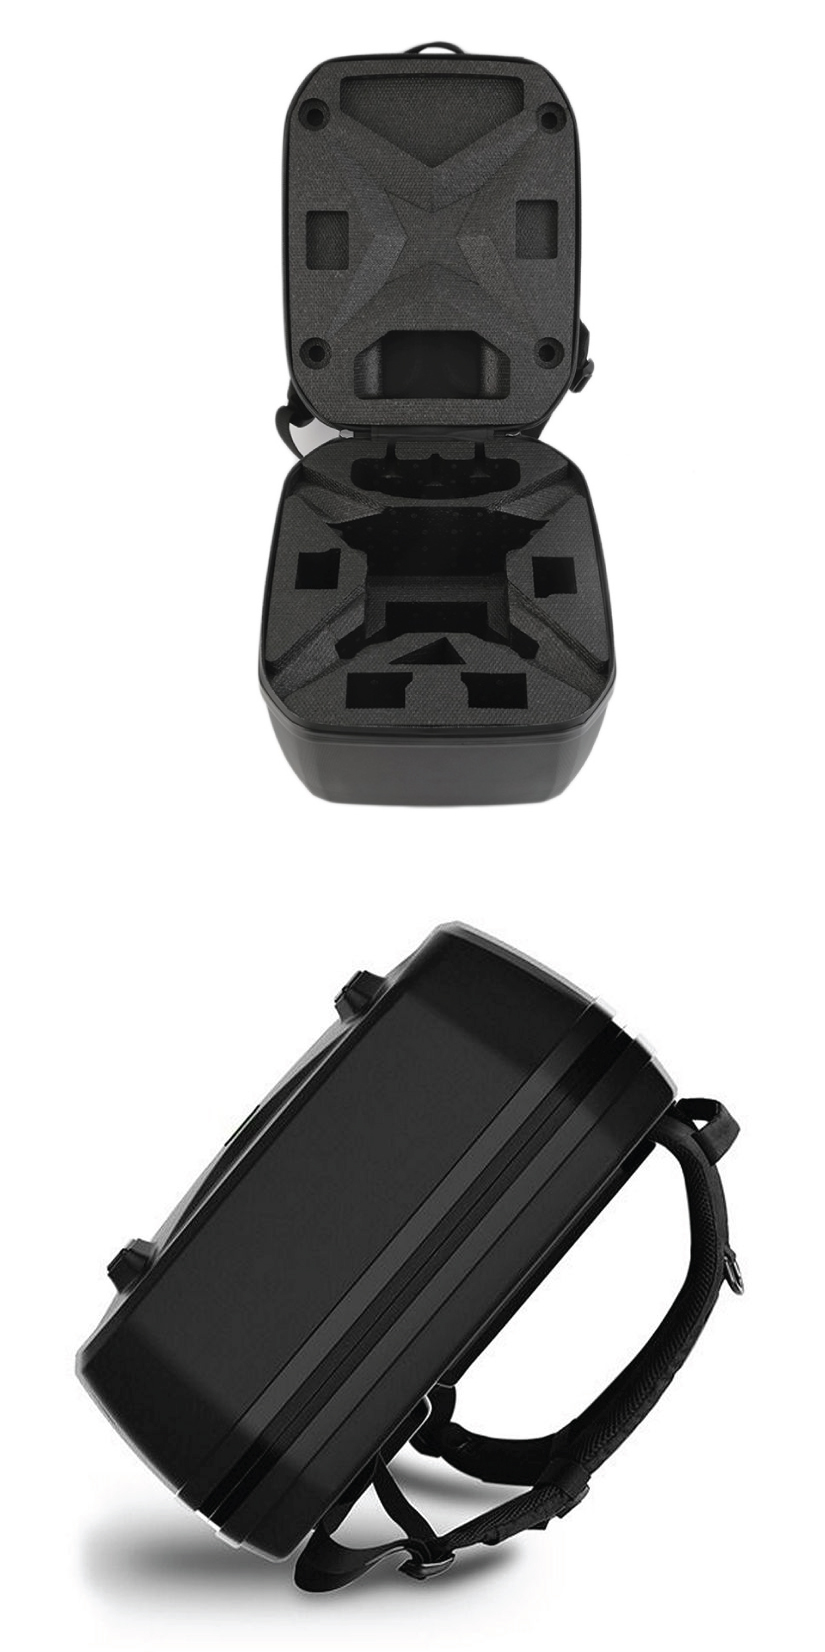 Xiro Xplorer Drone Carrying Case Waterproof - Black